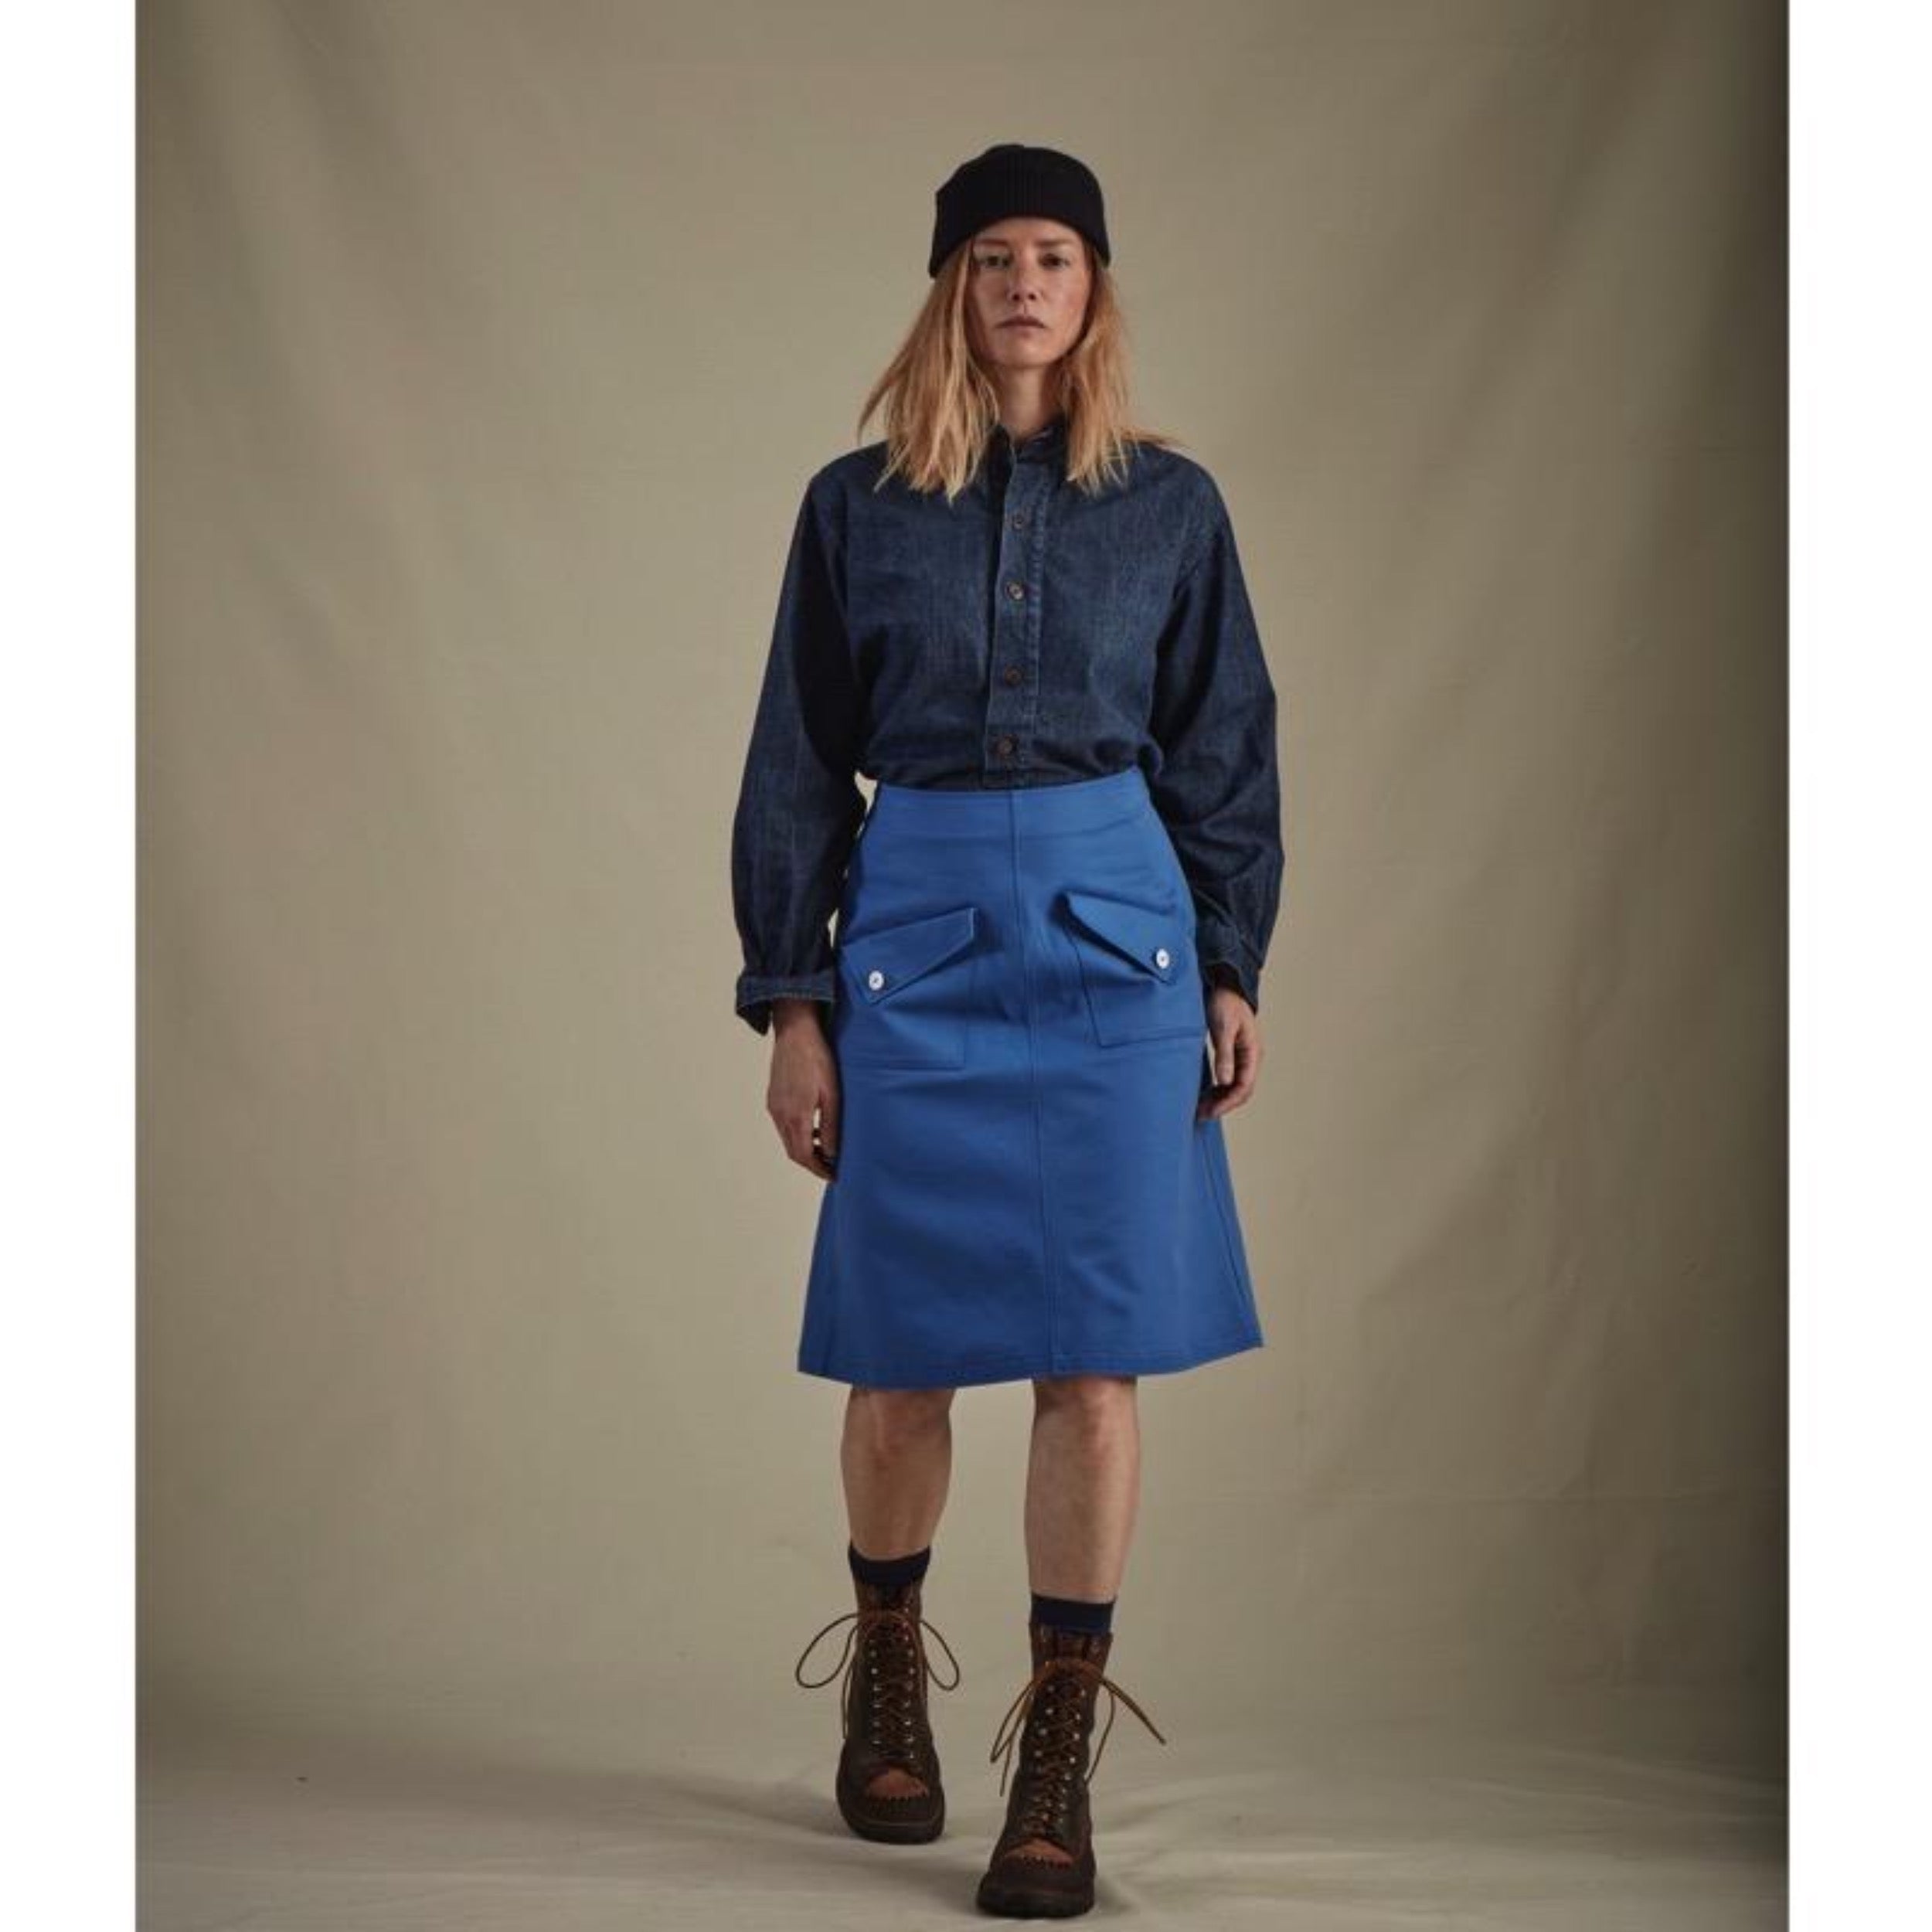 Woman wears Carrier Company Mum Skirt in Norfolk Sky Blue with Denim Work Shirt